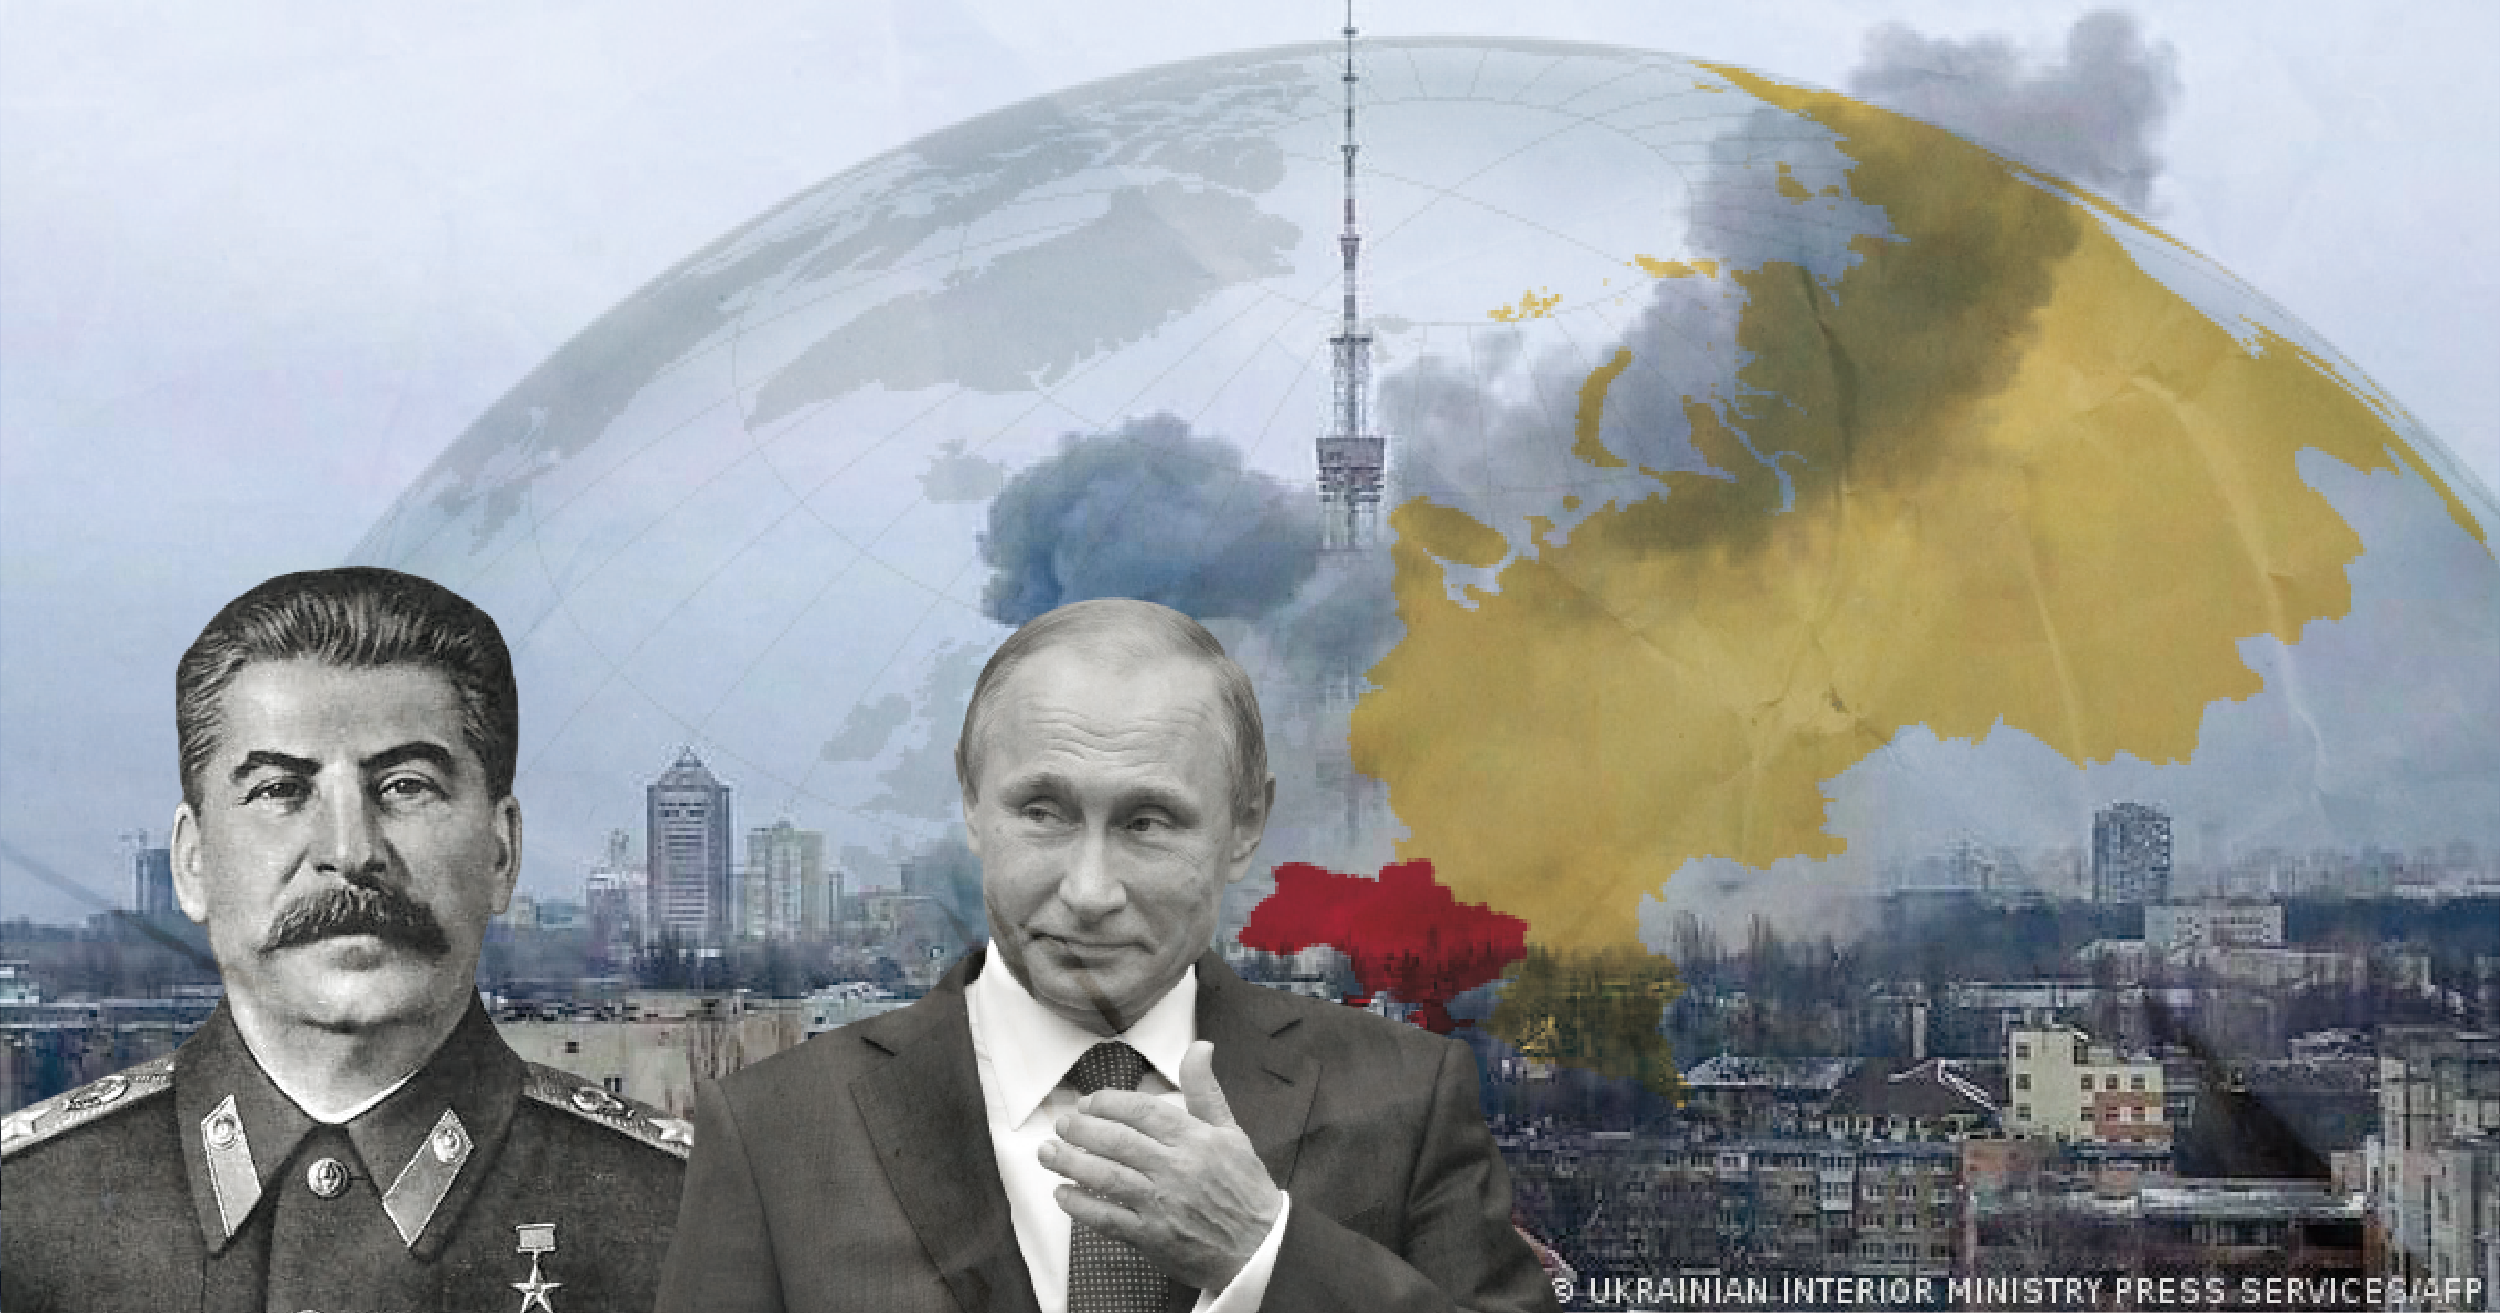 O stalinismo, a crise da ordem mundial e a invasão russa | PSTU